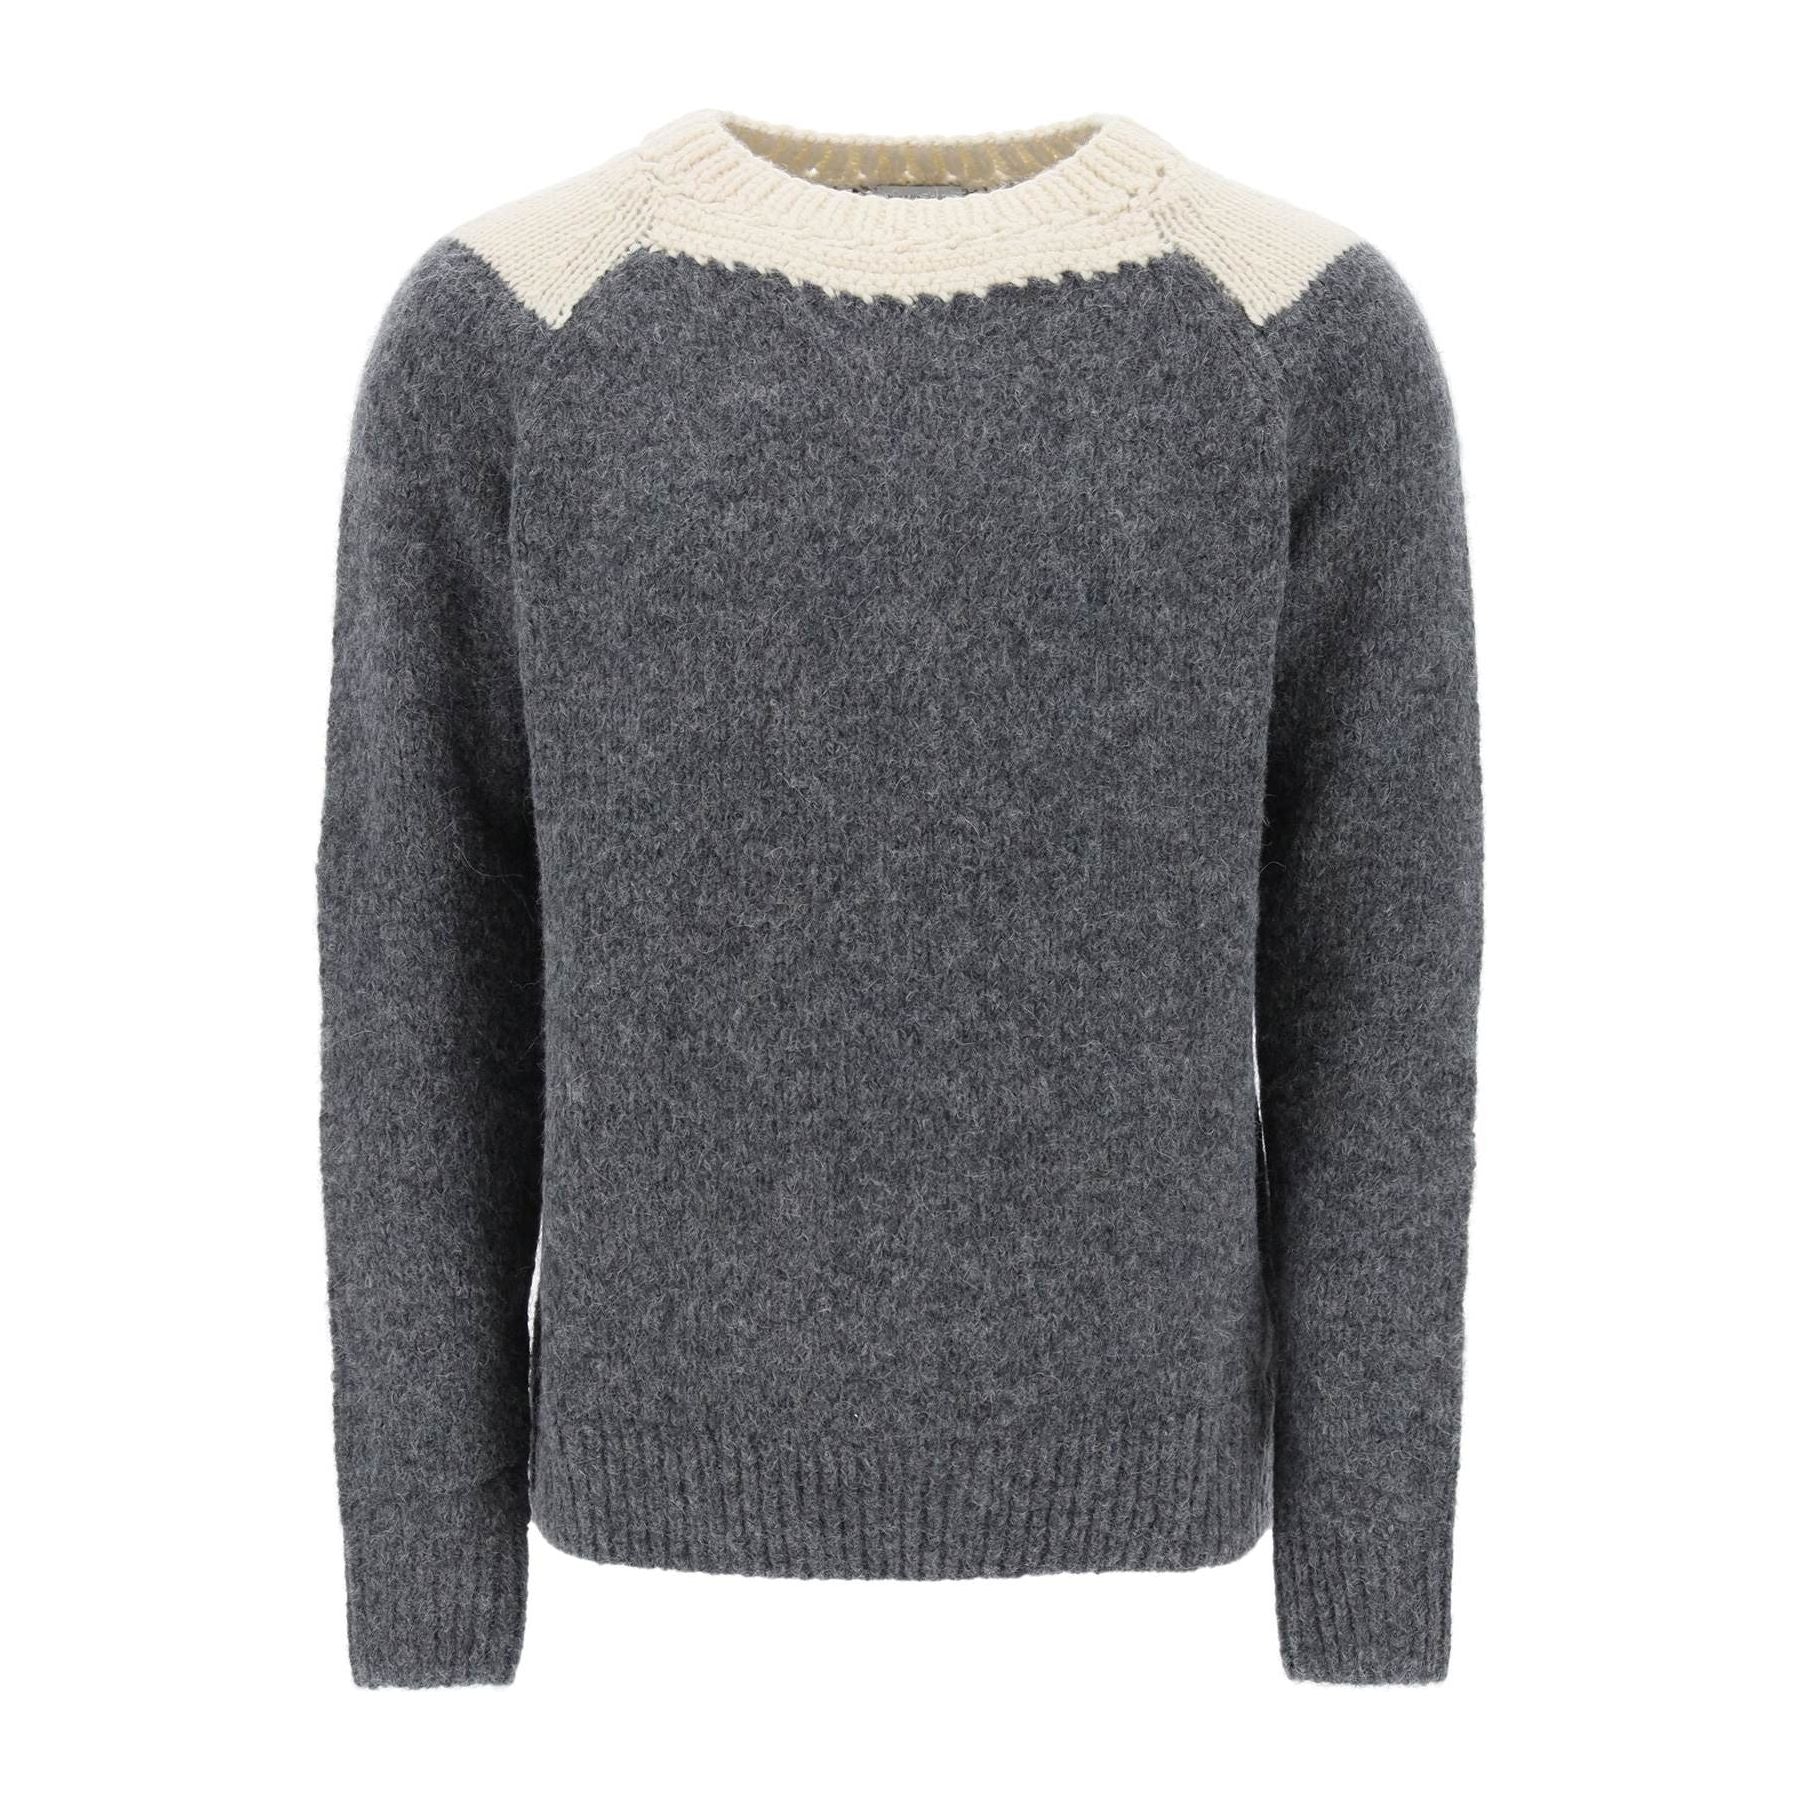 Two Tone Alpaca And Wool Sweater